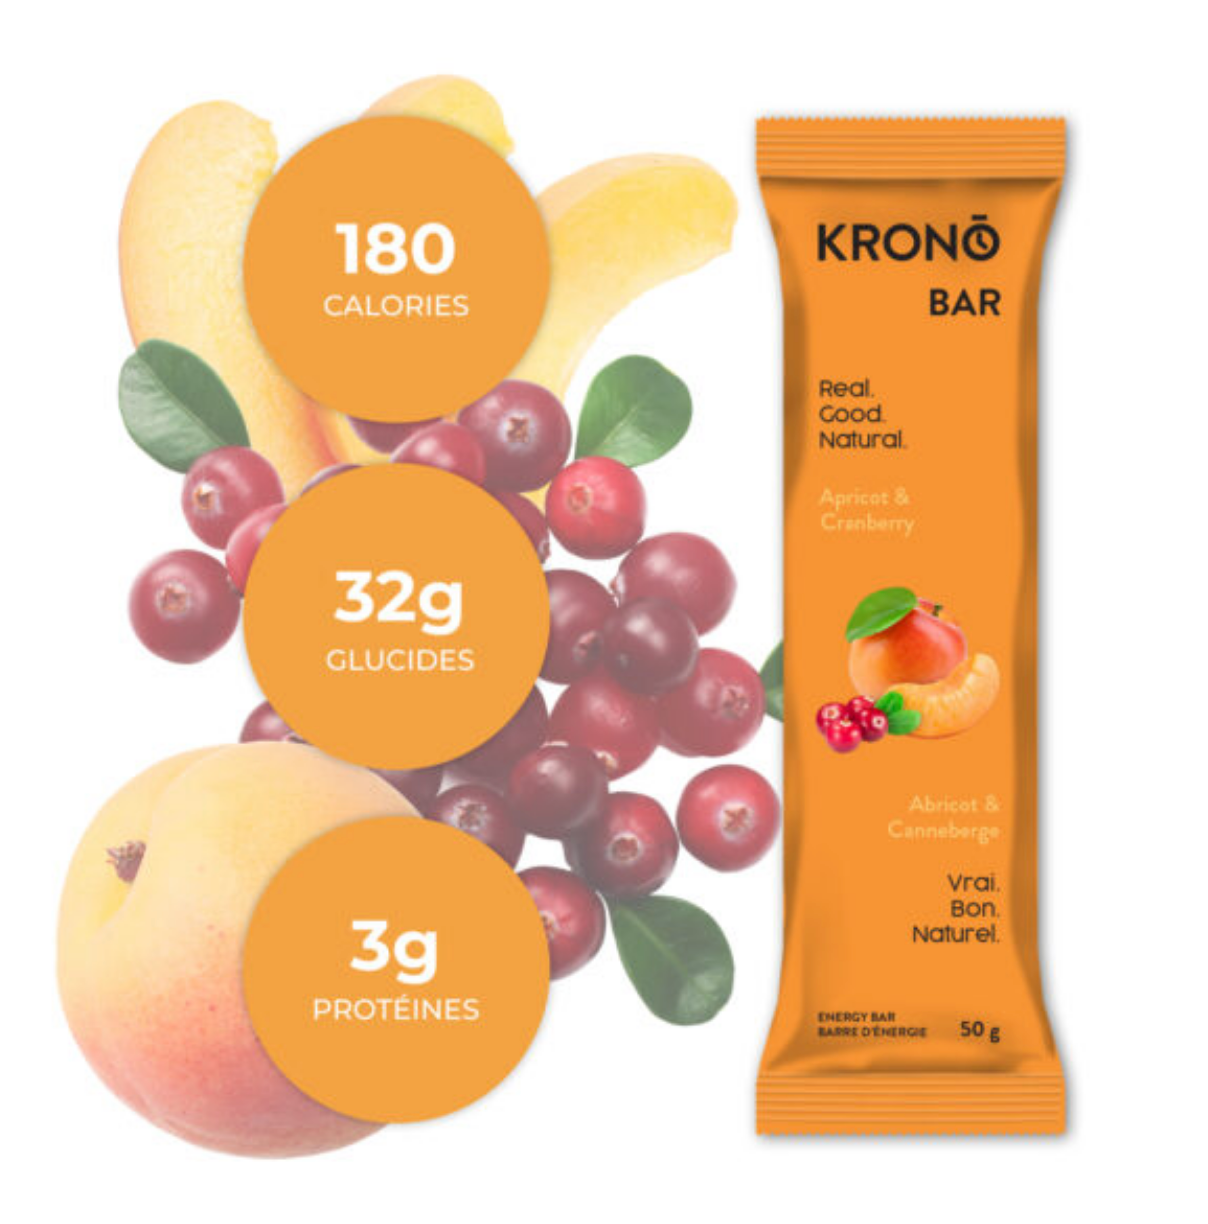 Apricot & Cranberry Energy Bar